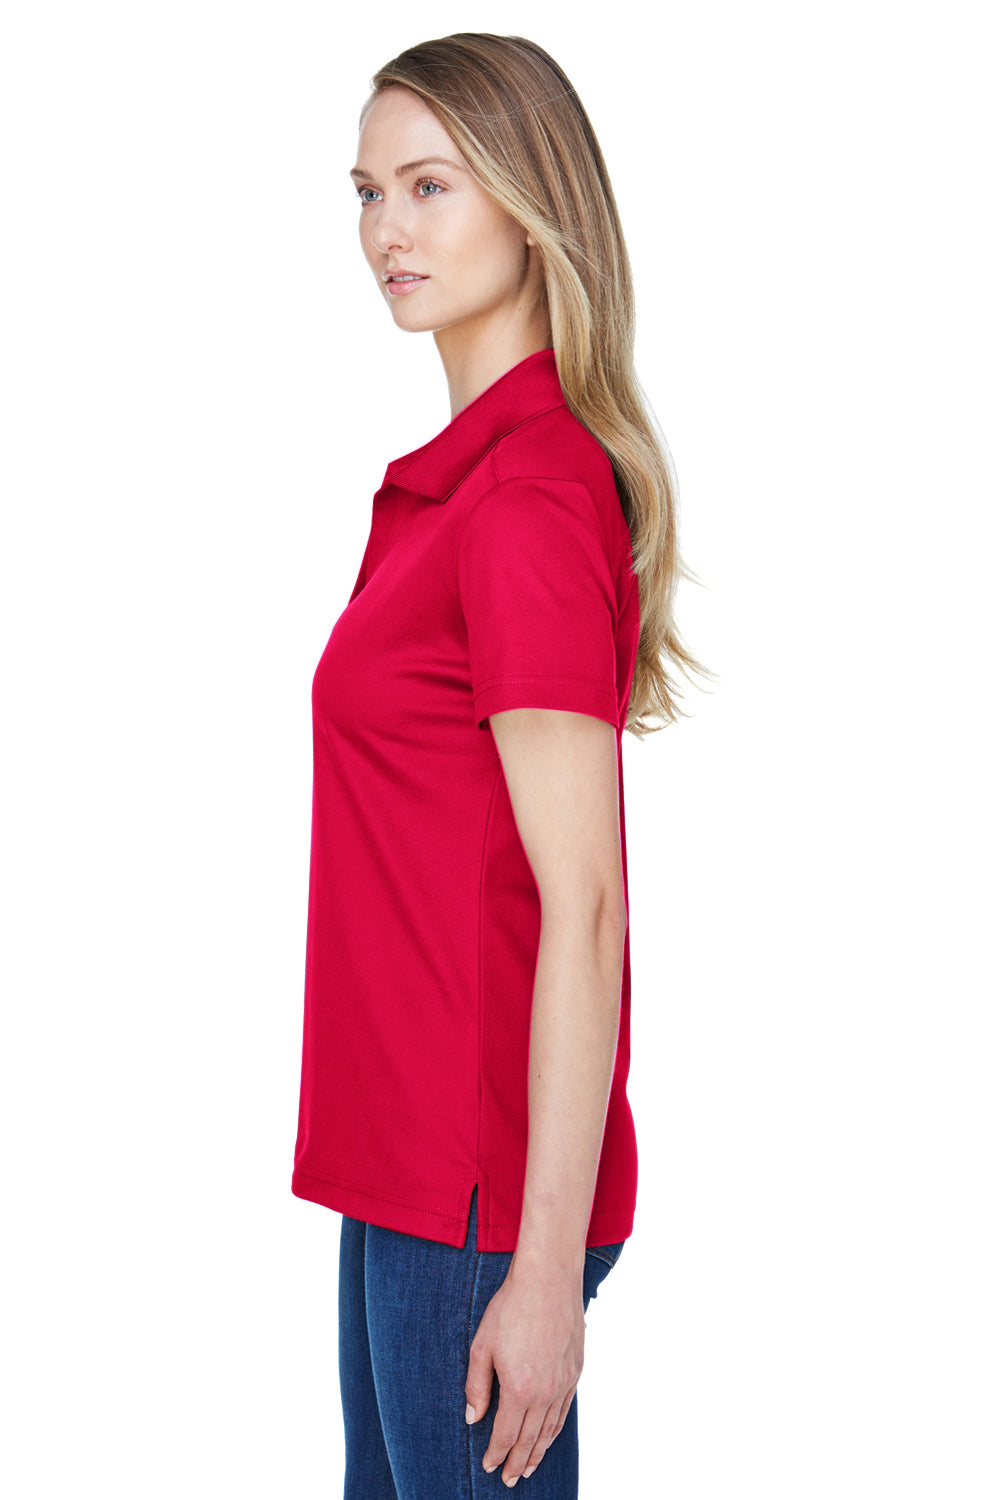 Devon & Jones DG20W Womens CrownLux Performance Moisture Wicking Short Sleeve Polo Shirt Red Side